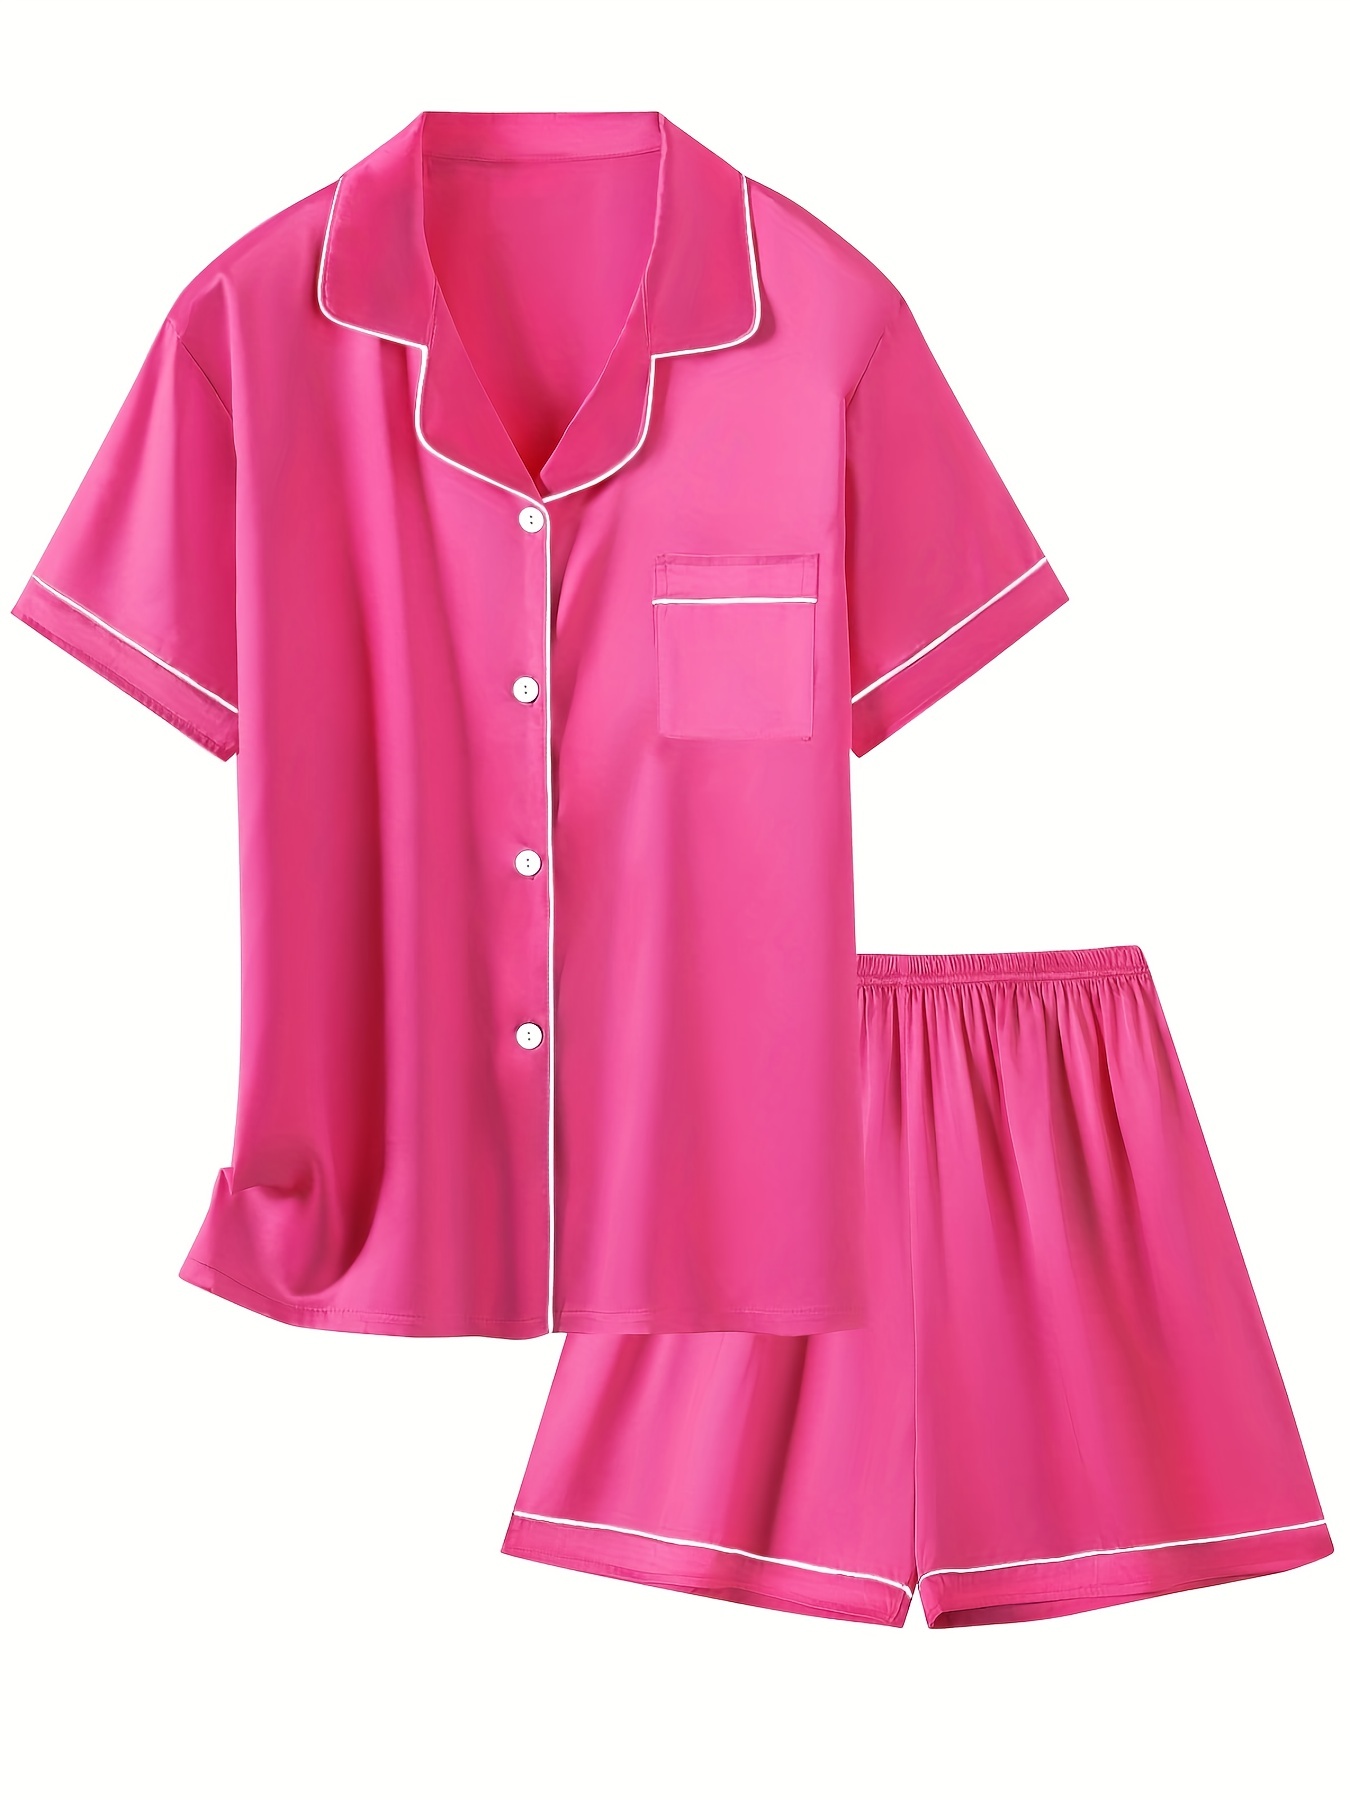 Neon Hot Pink Contrast Binding Satin Pajama Set